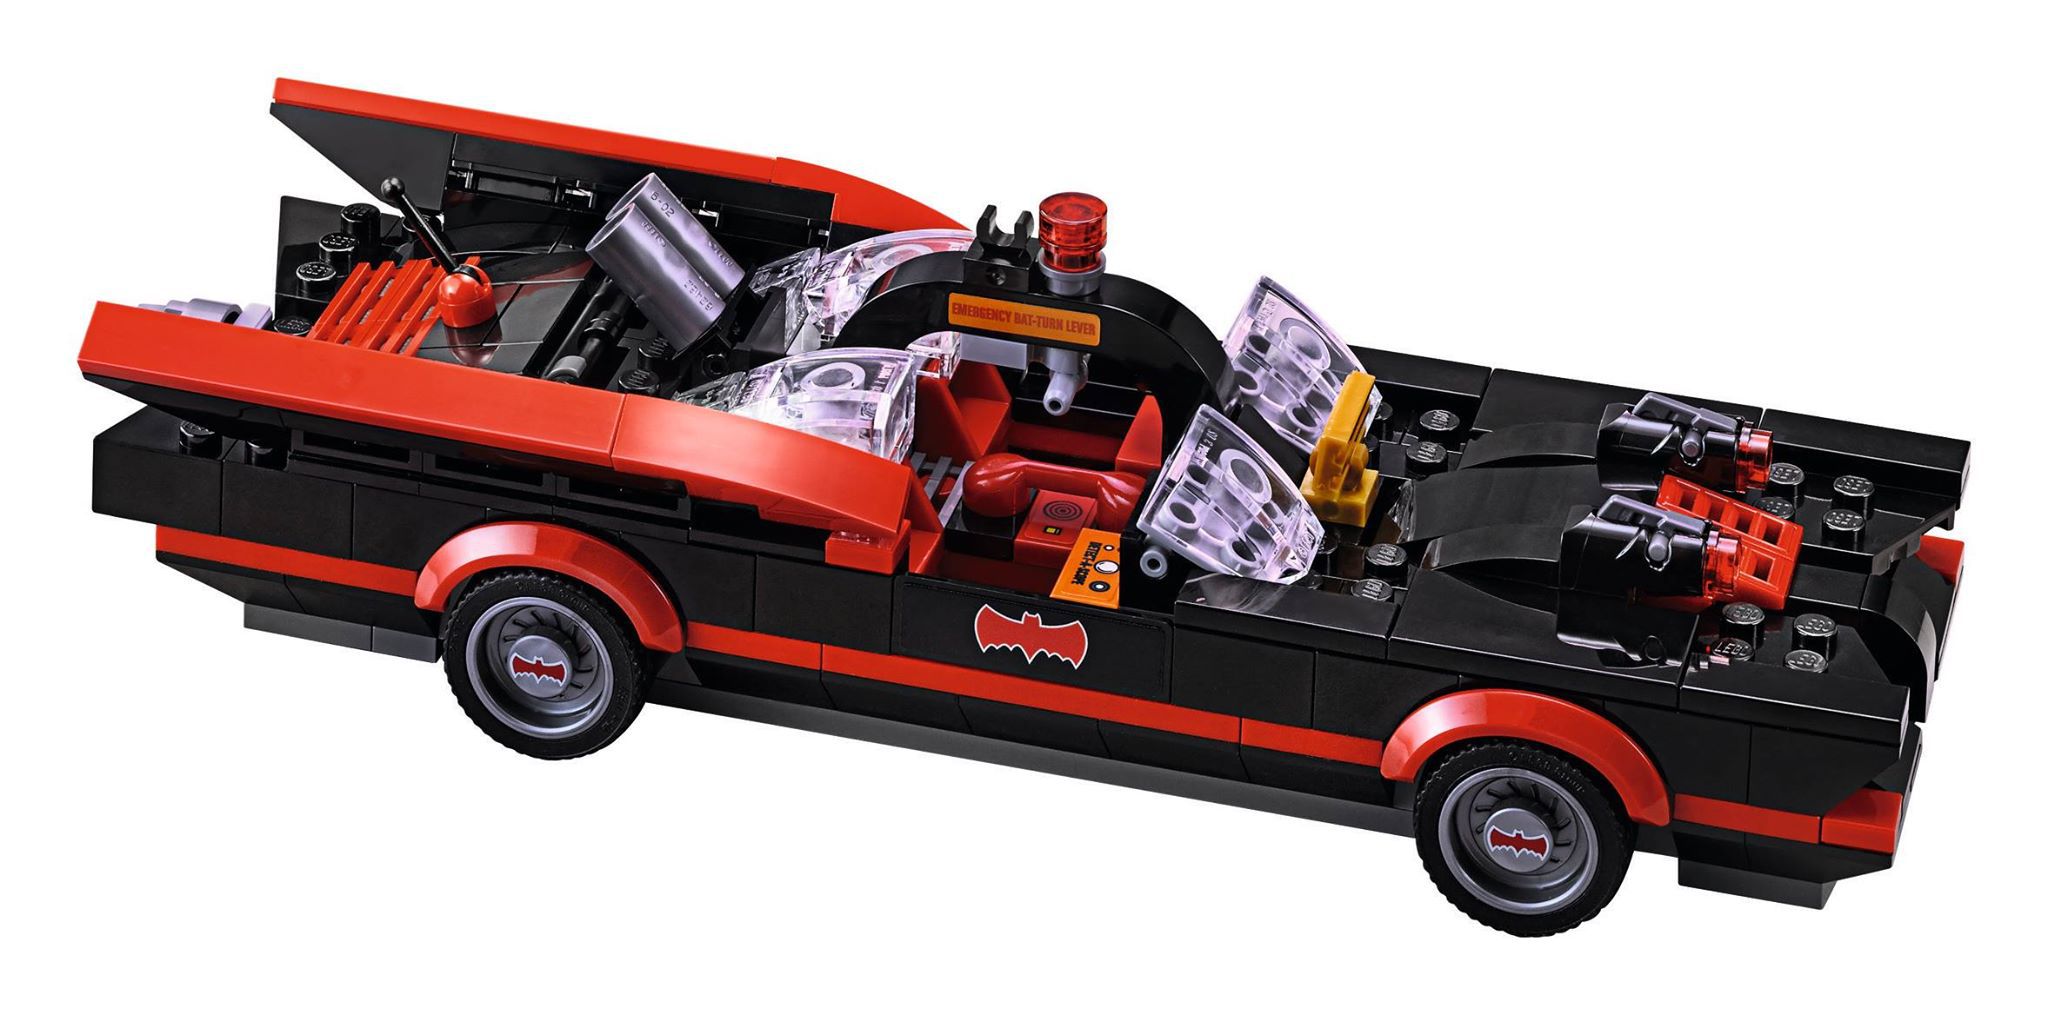 LEGO Super Heroes 76052 Batman™ (TV-Klassiker) – Bathöhle LEGO_76052_Batcave_08.jpg